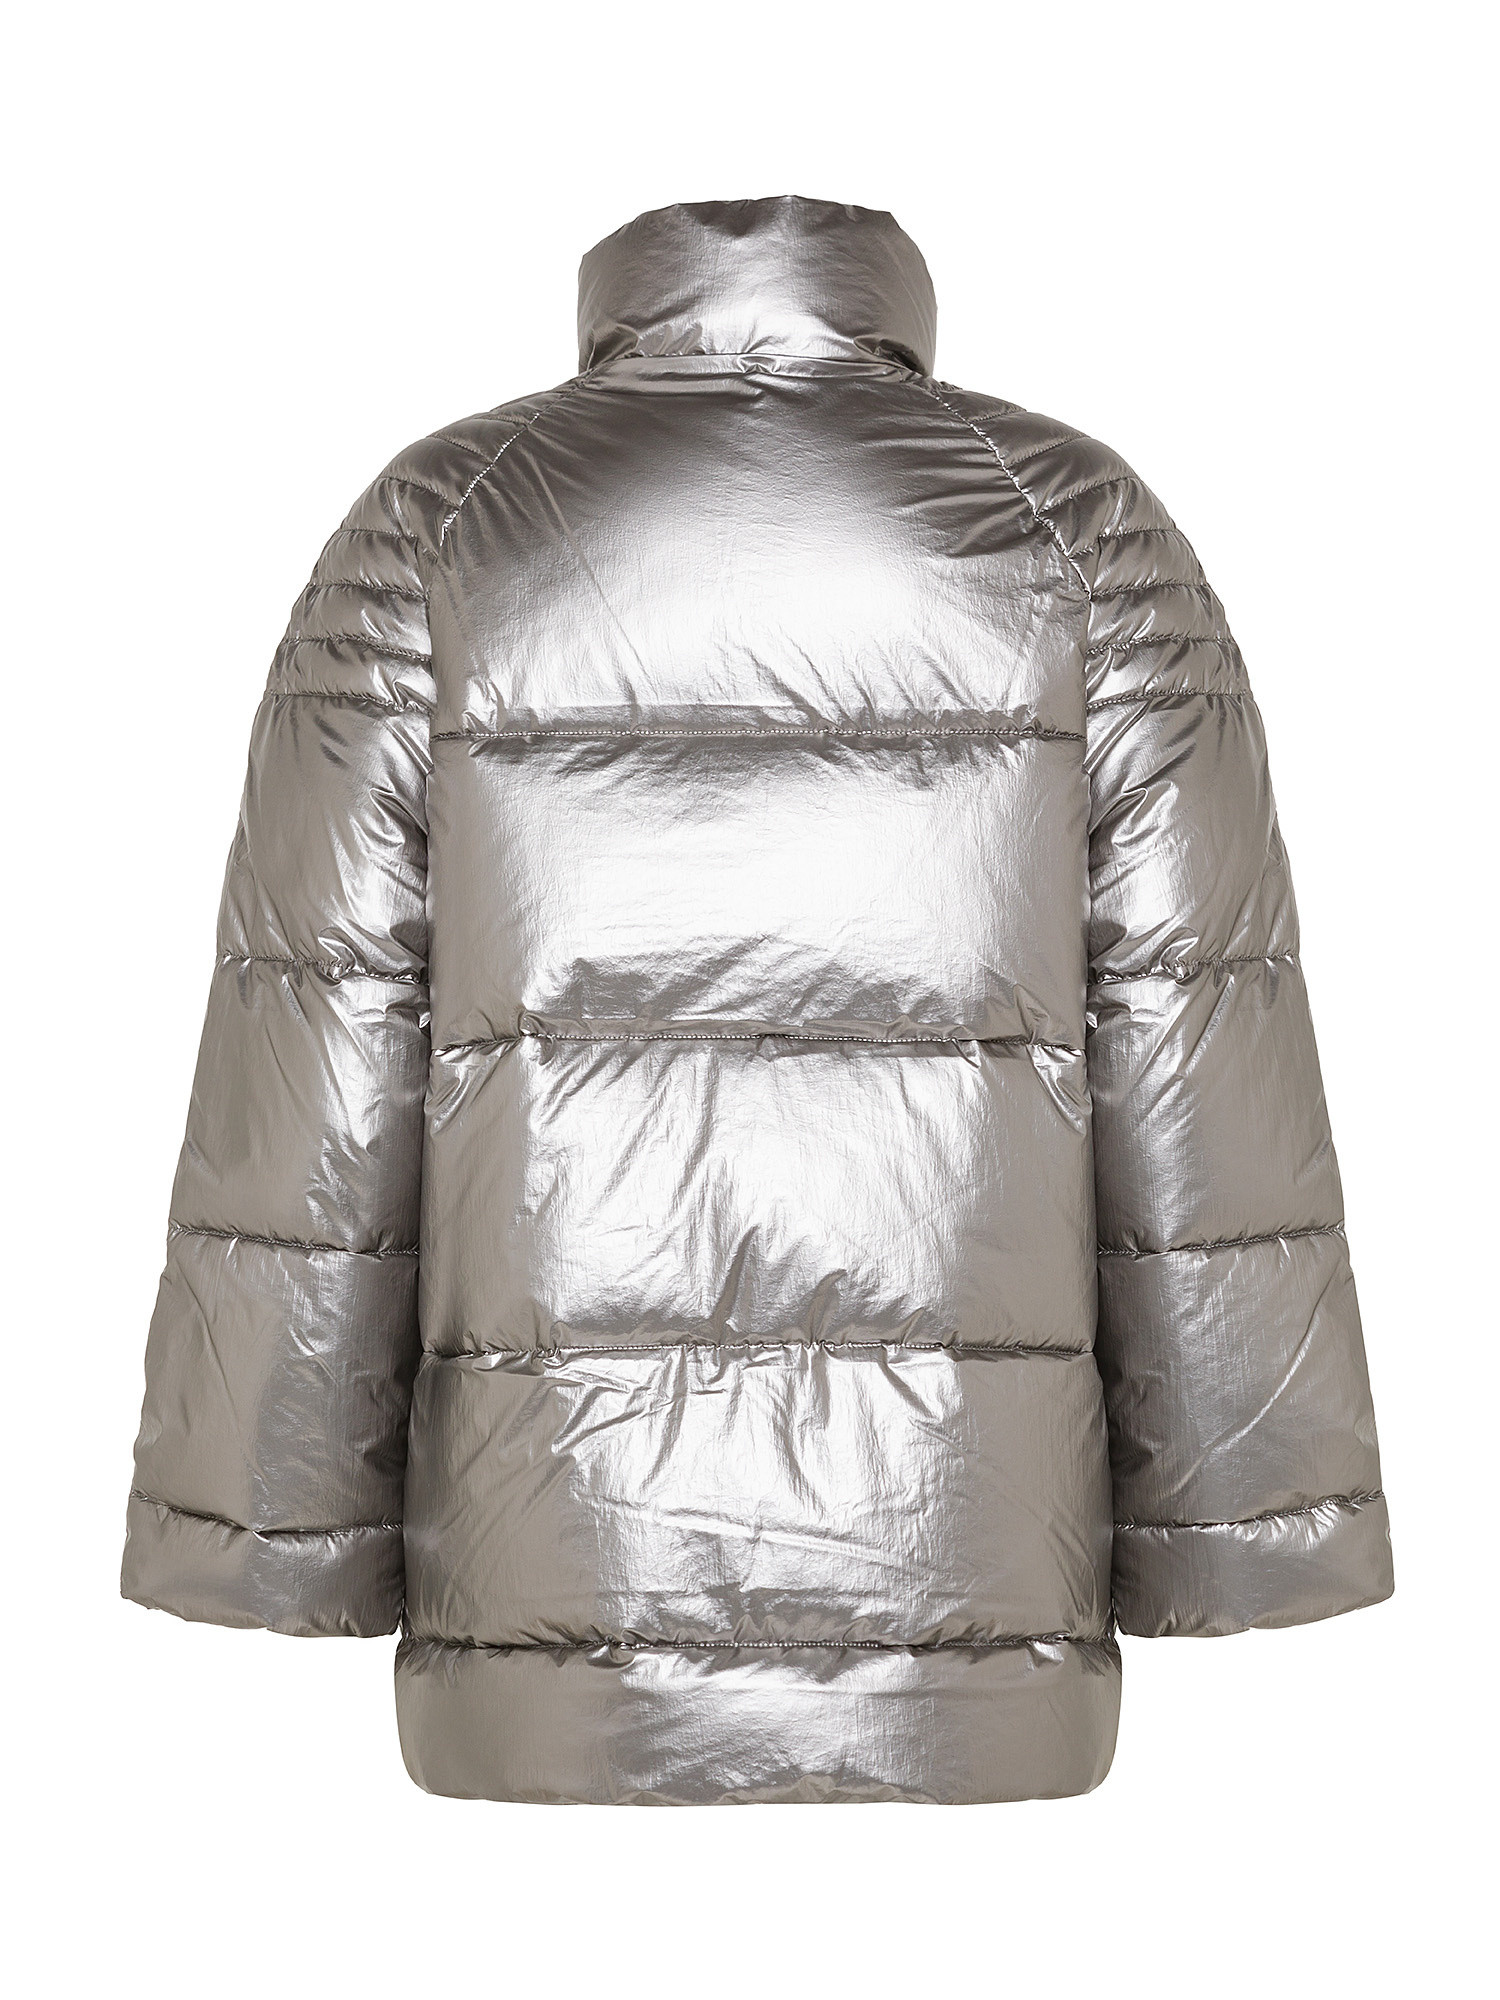 Armani Exchange - Padded jacket with zip, Silver Grey, large image number 1